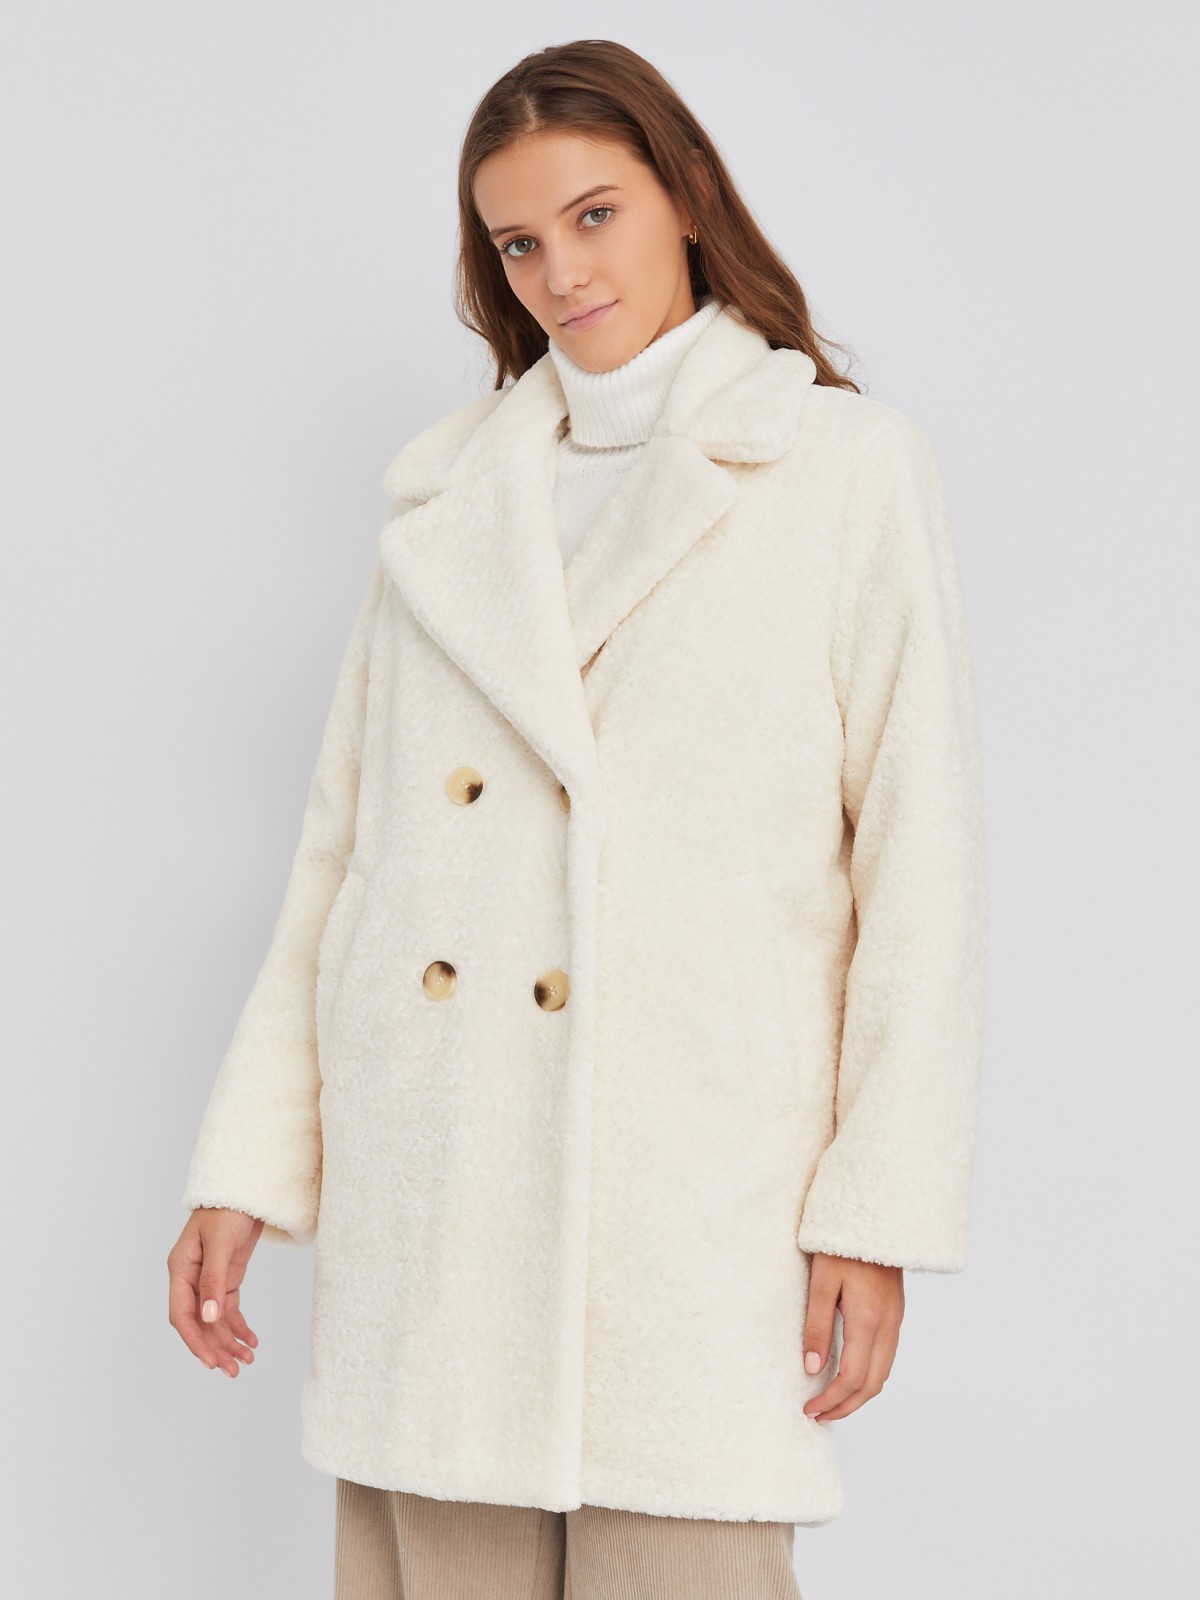 Двубортная тёплая шуба-пальто из экомеха на синтепоне zolla 023345550024, цвет молоко, размер XS - фото 3